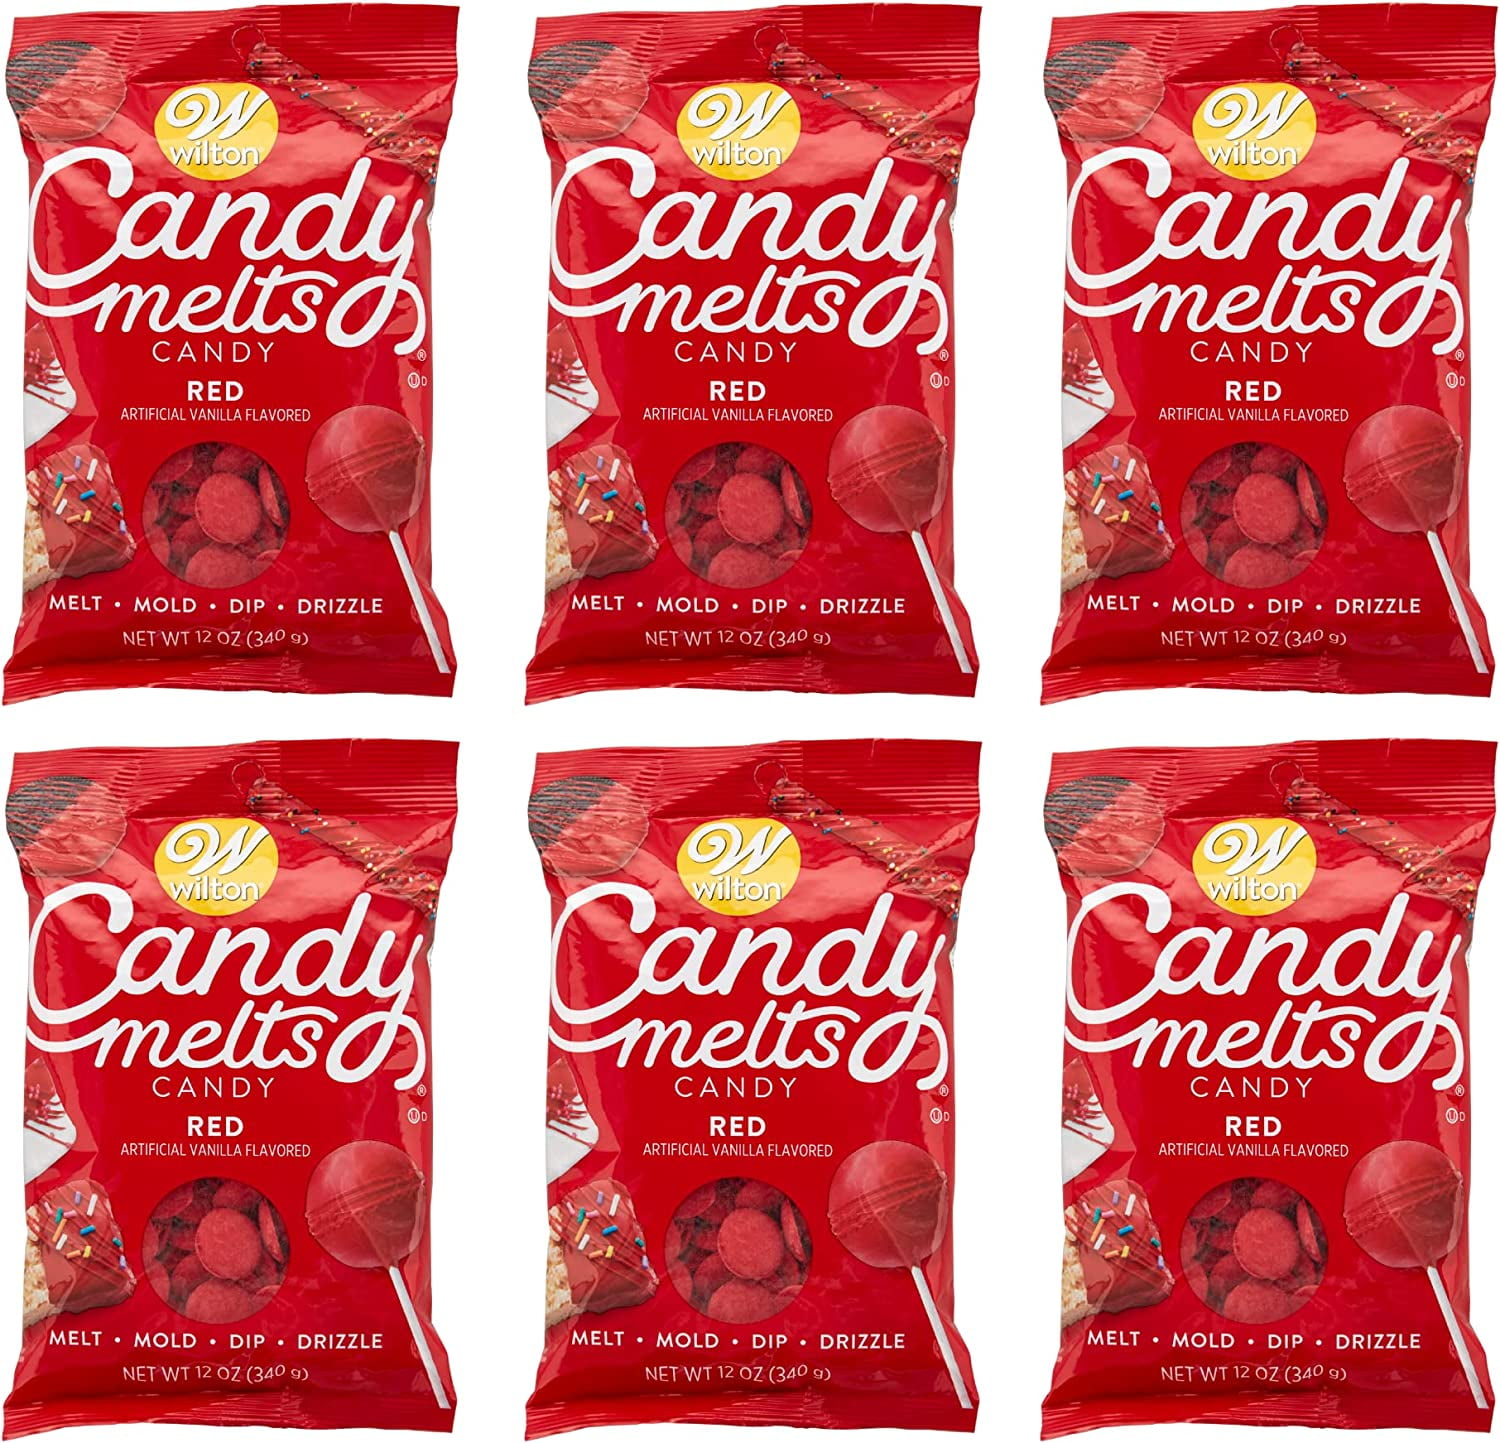 Wilton® Candy Melts®, 7 oz - Ralphs